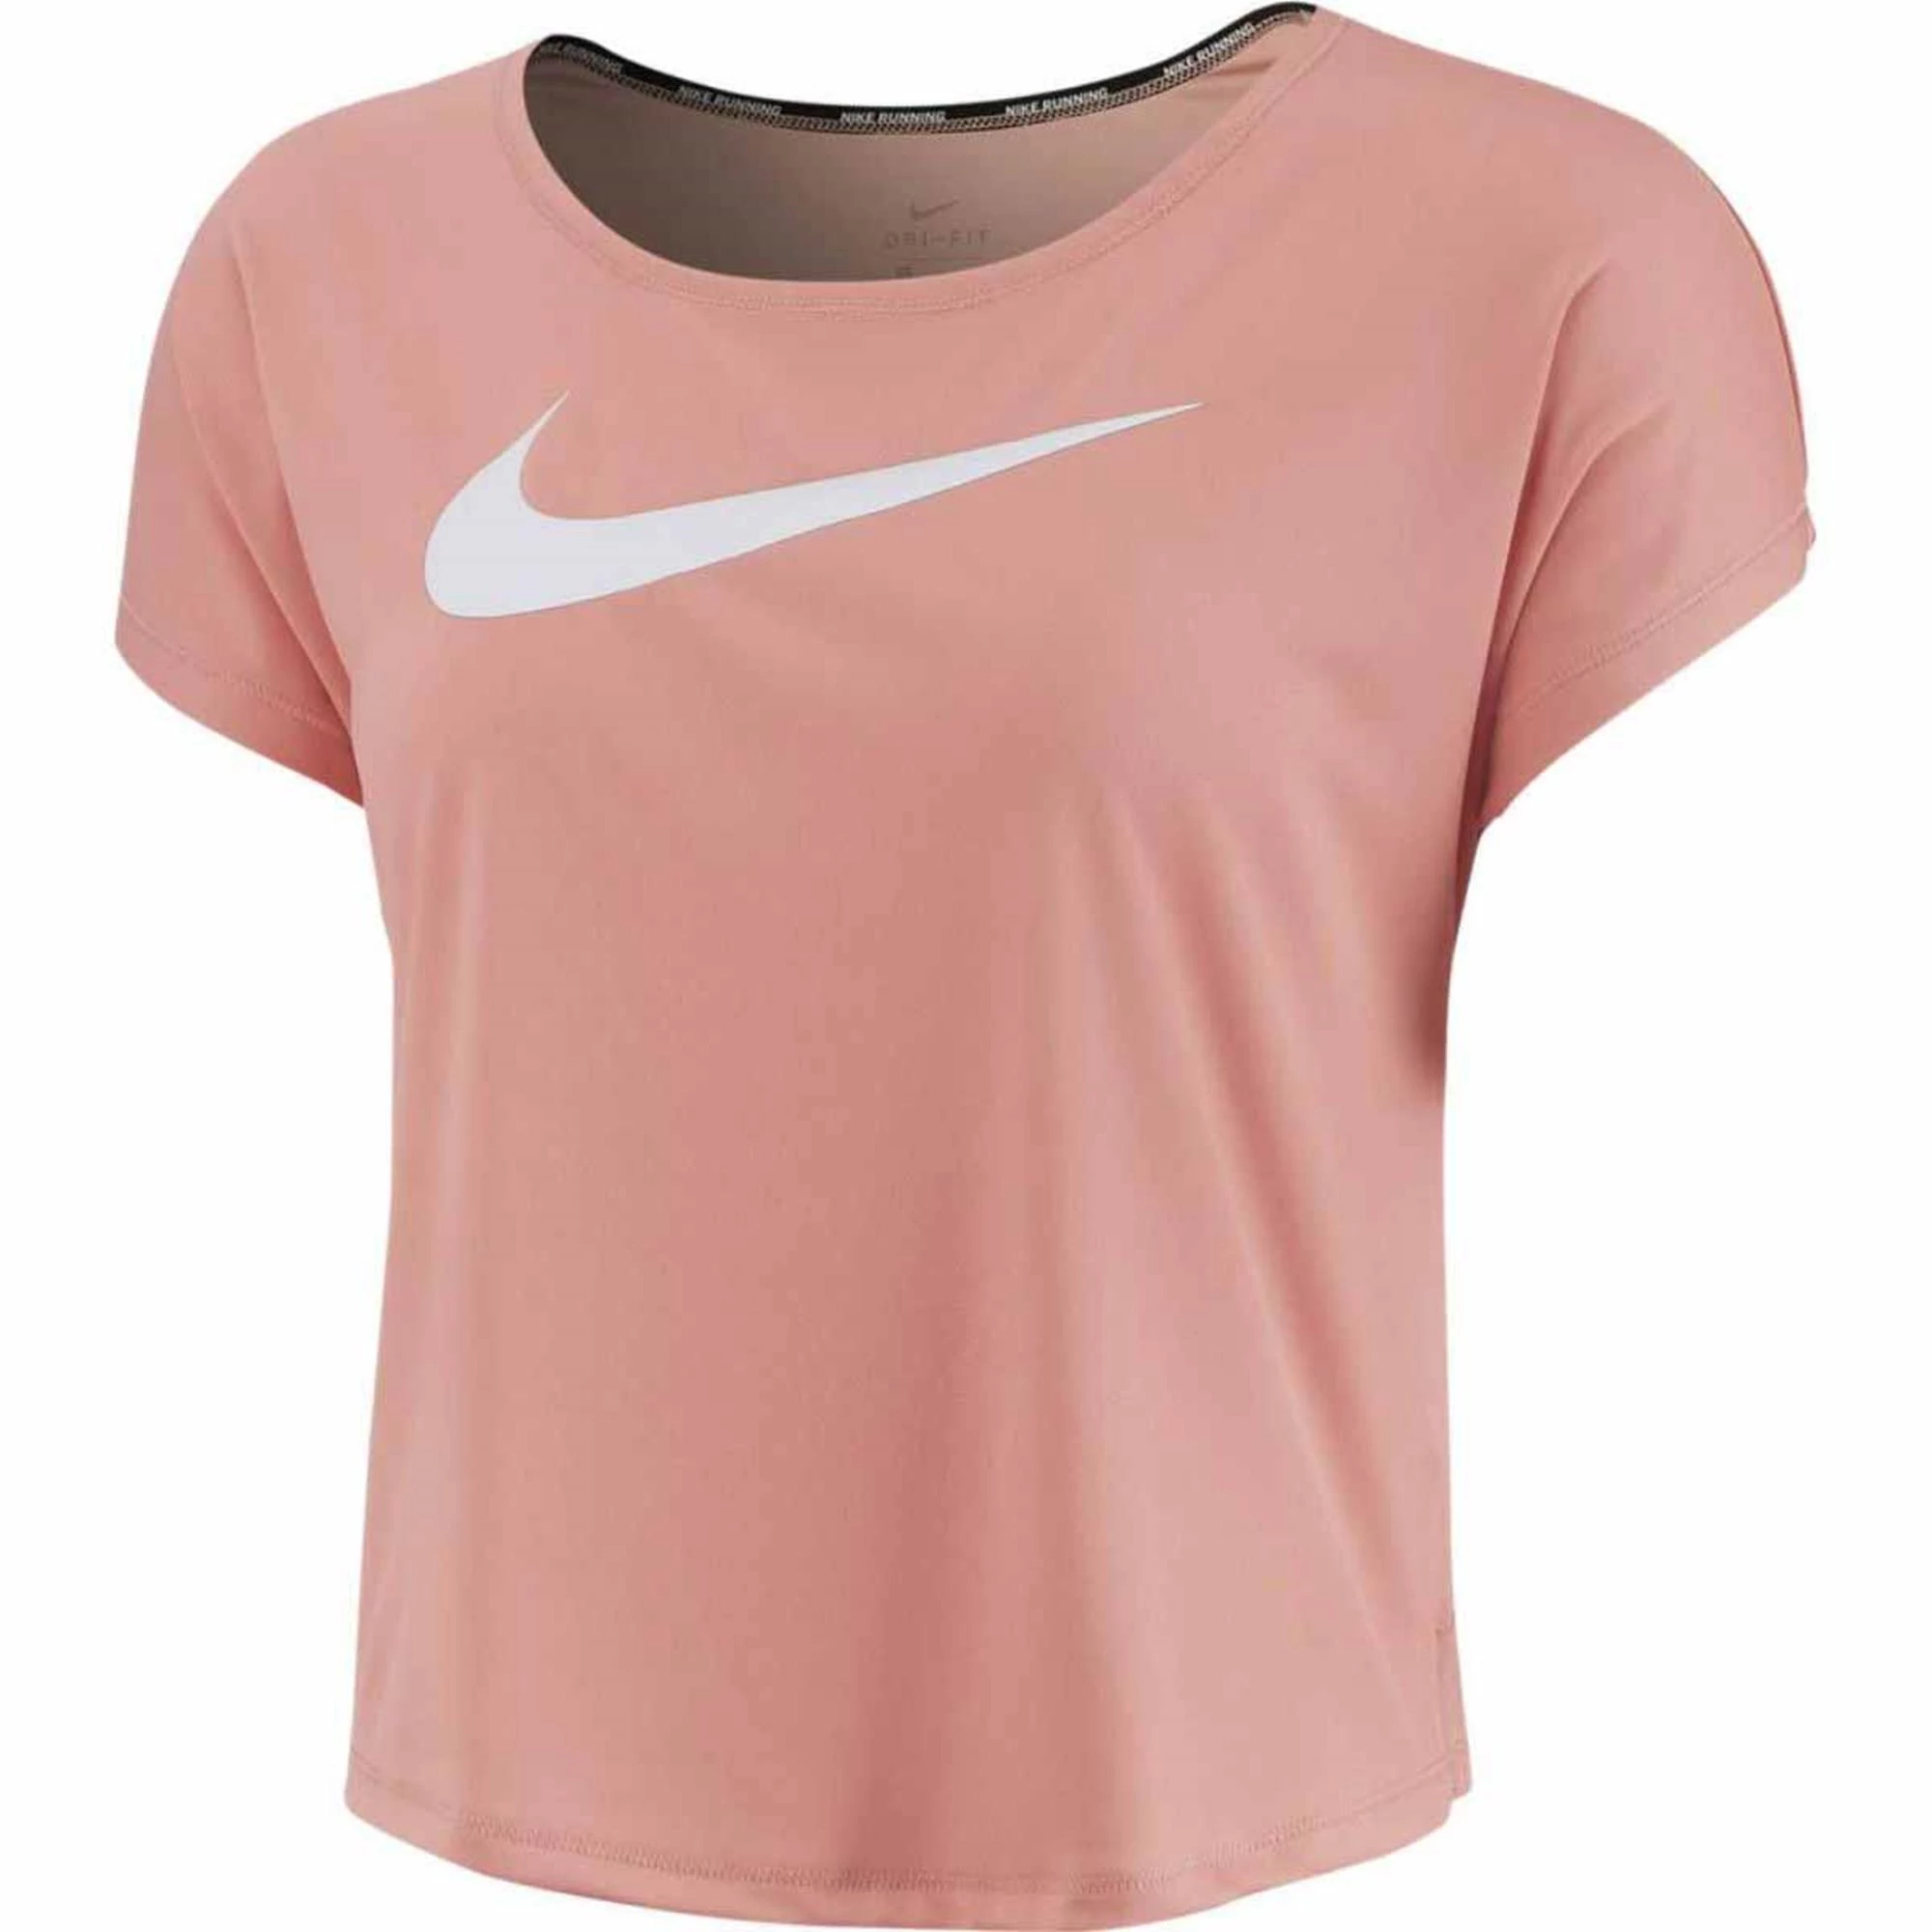 Nike Swoosh run top dames hardloopshirt